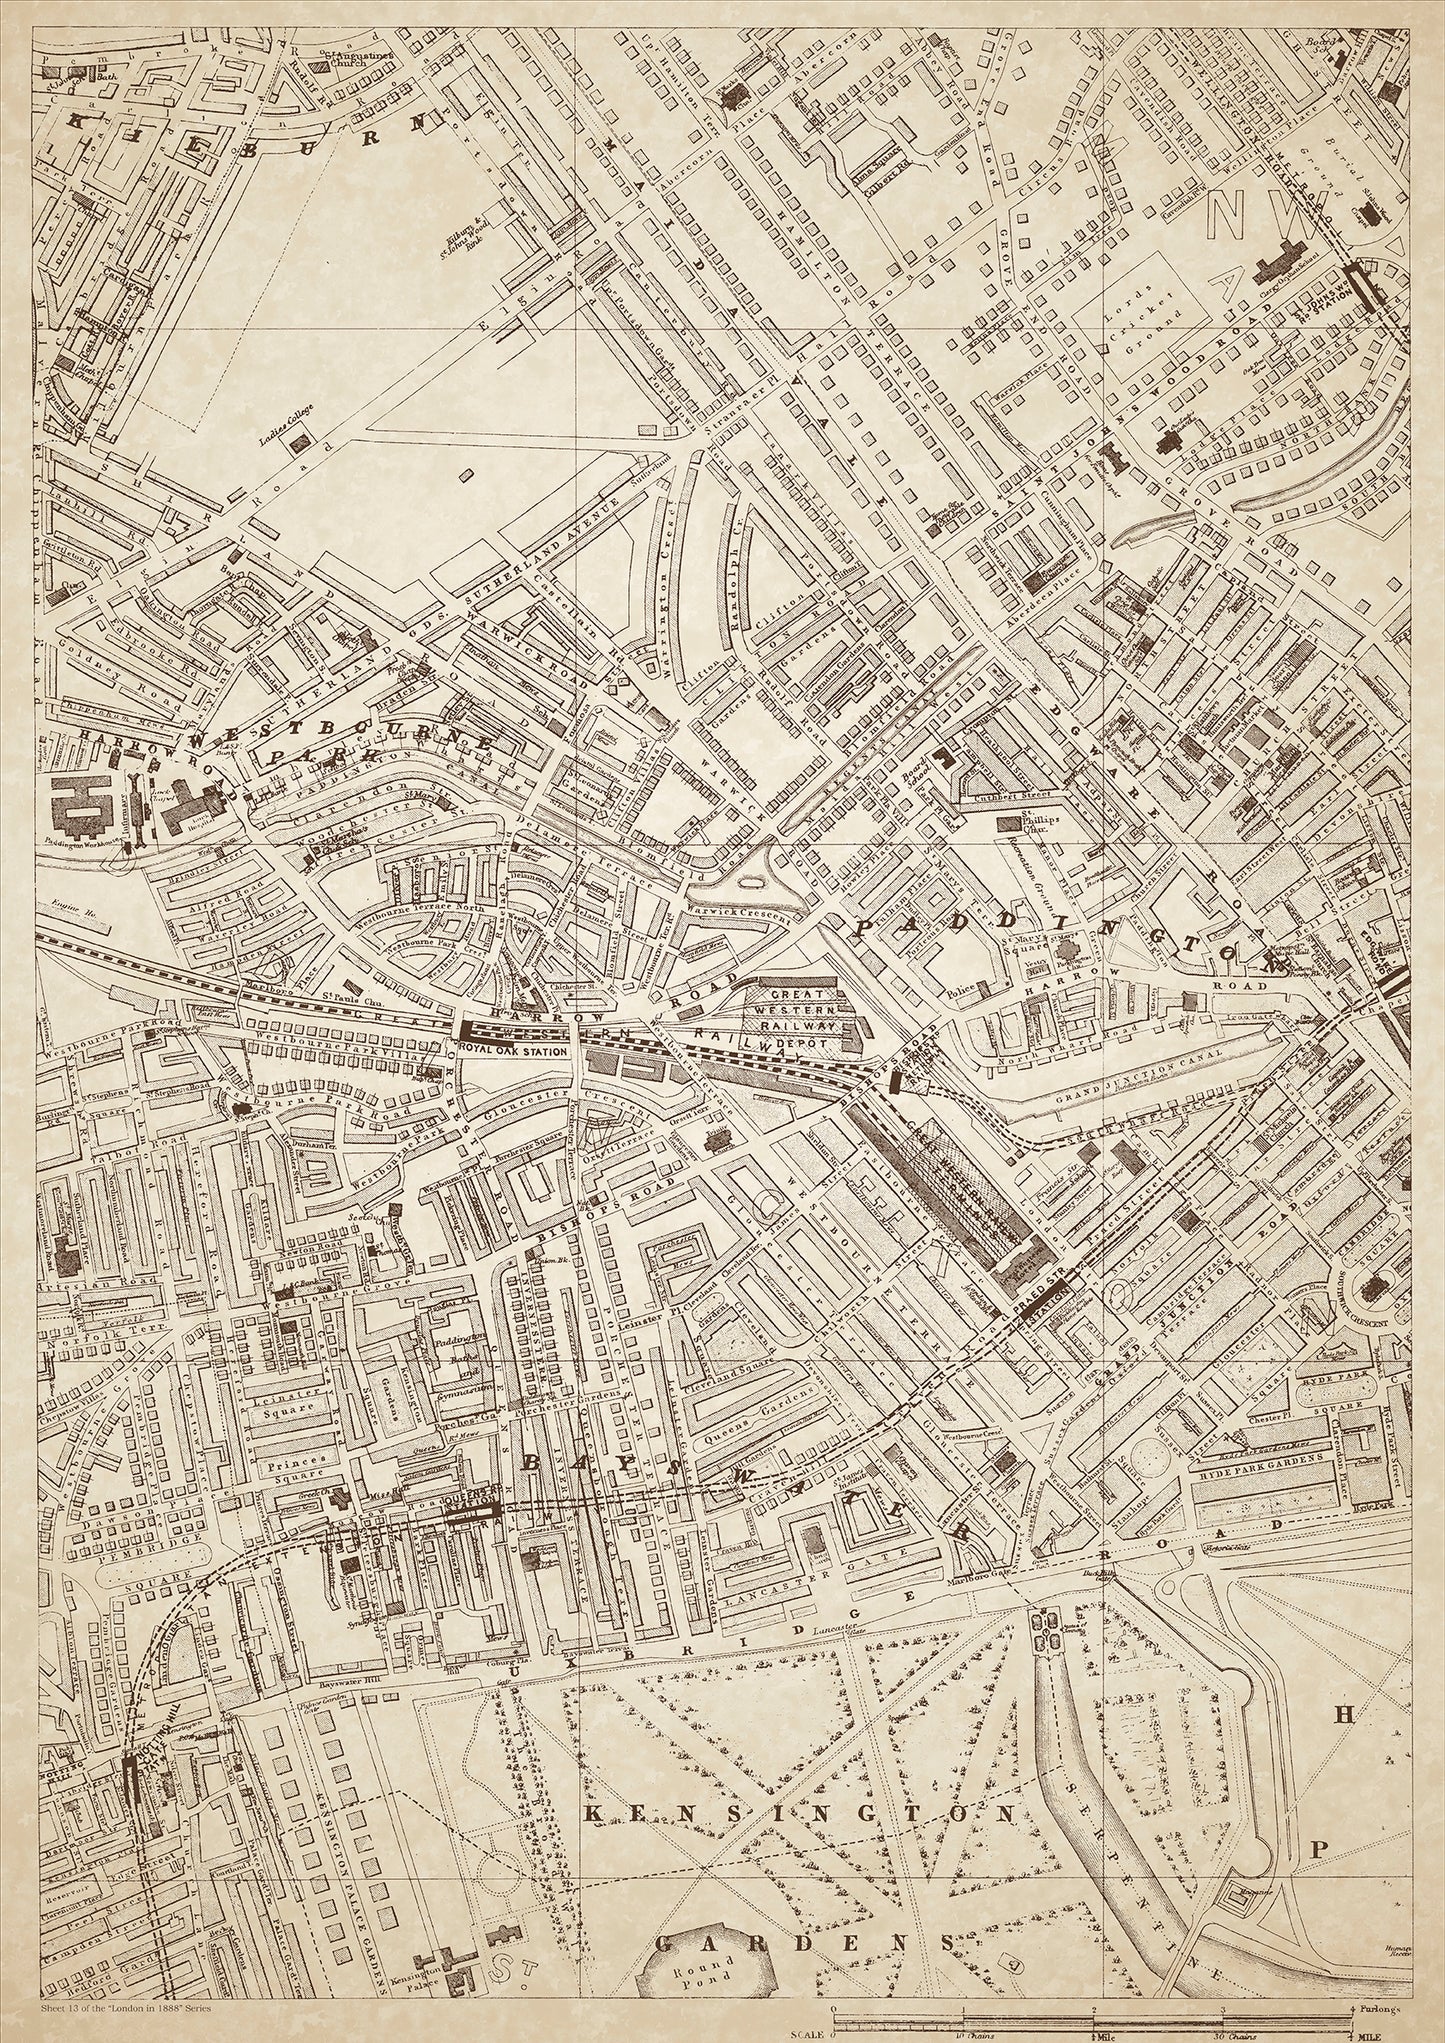 London in 1888 Series - showing Westbourne Park, Paddington, Bayswater, Edgware Road - sheet 13